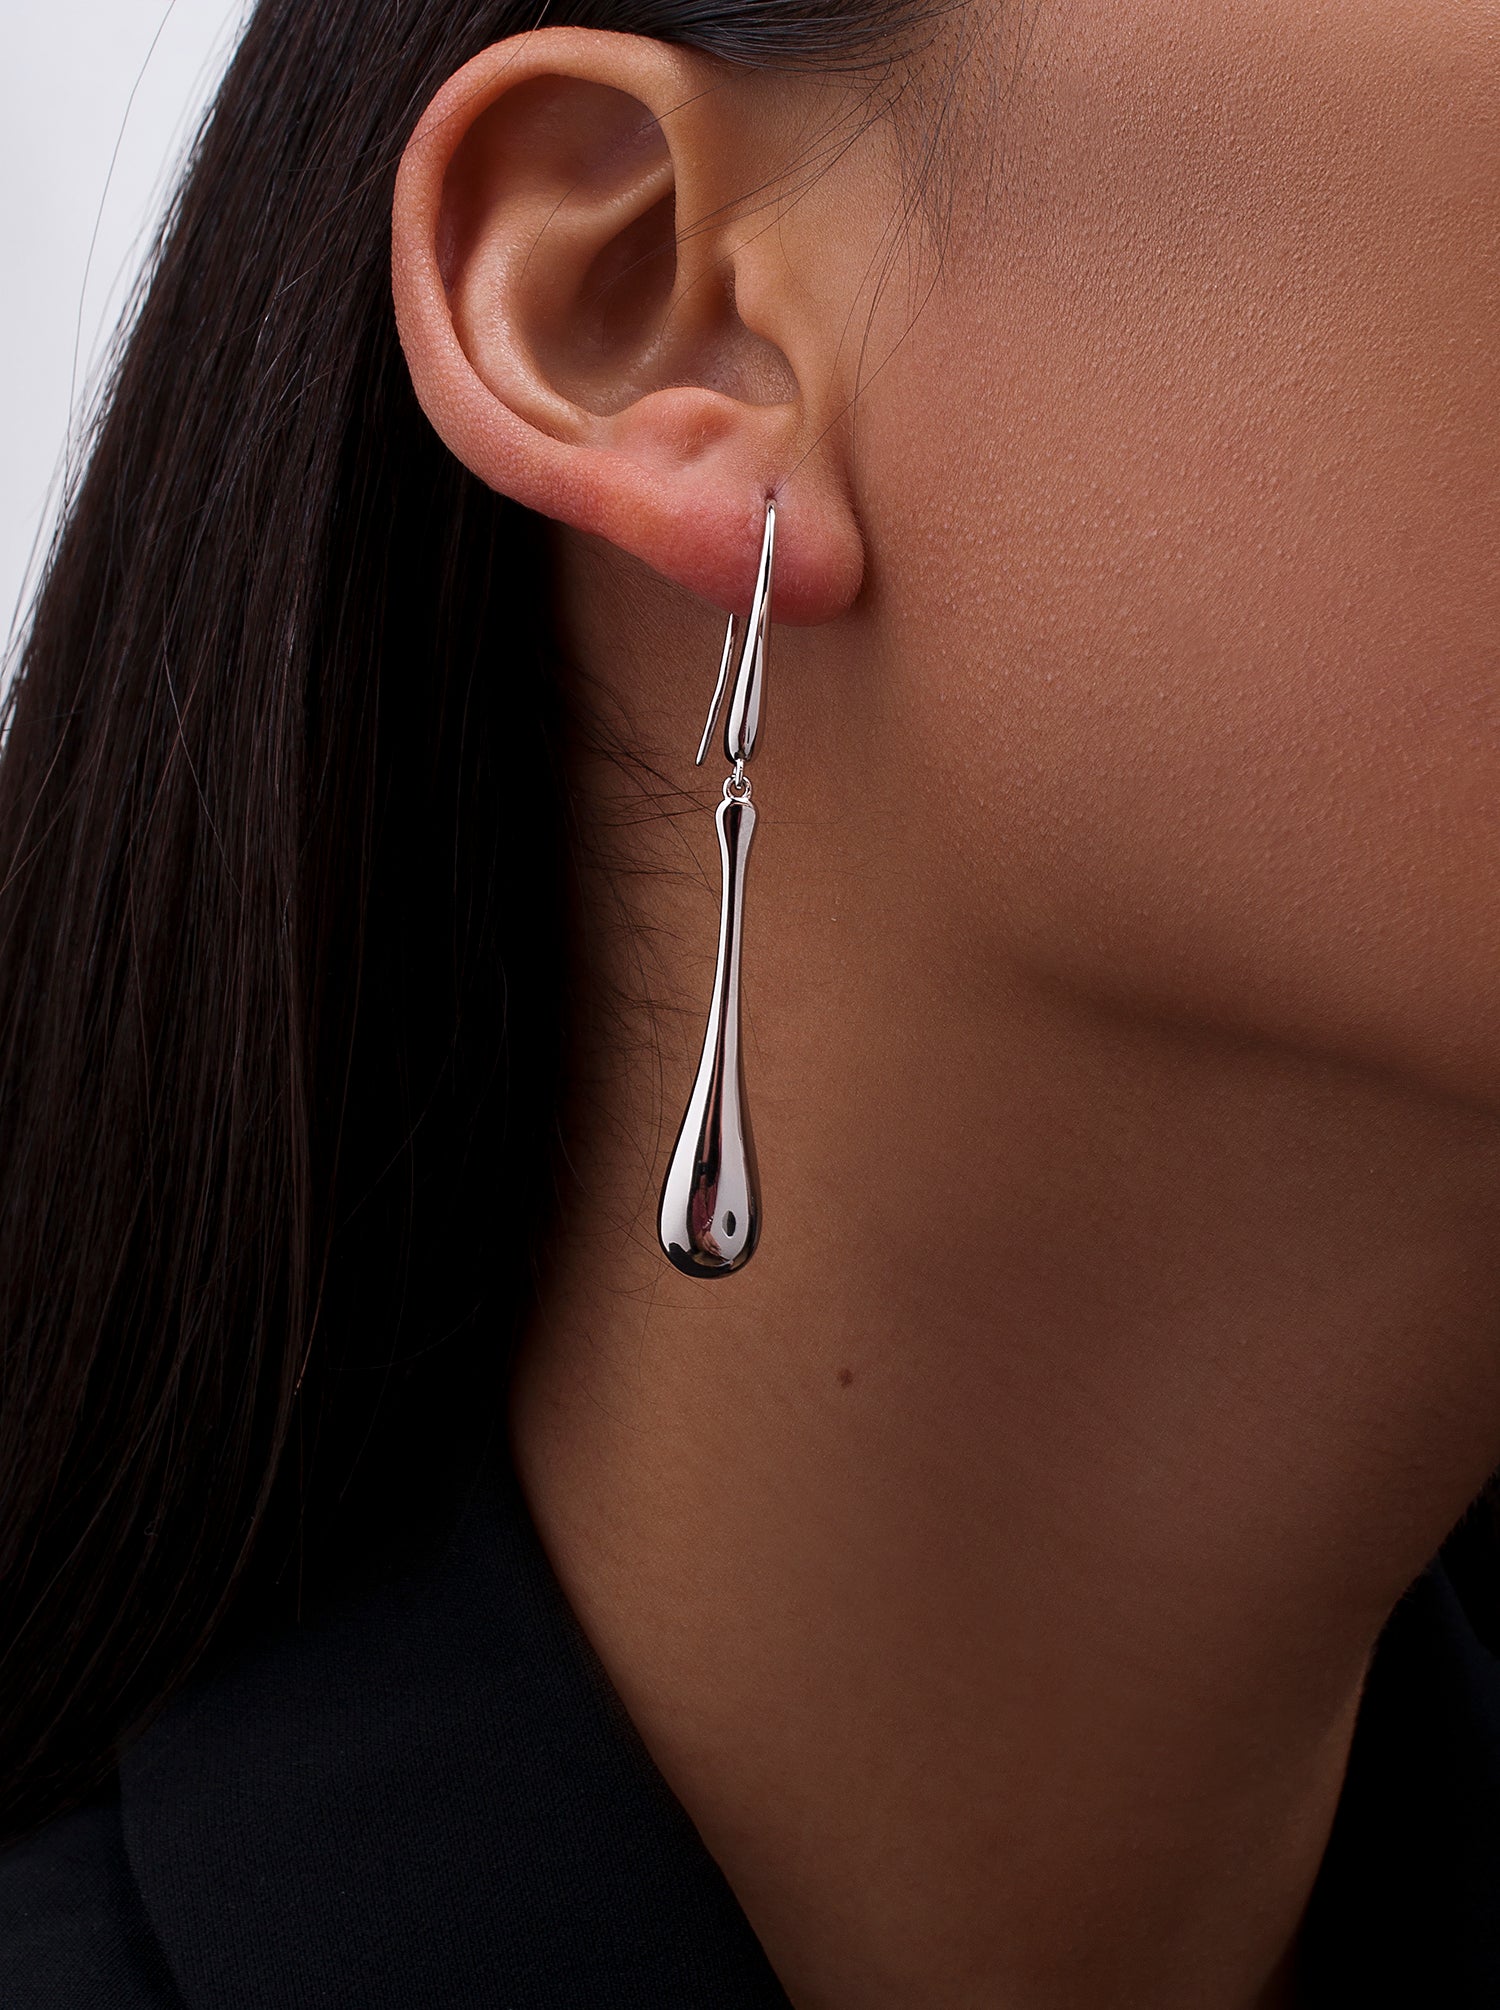 Original long silver earrings with teardrop design